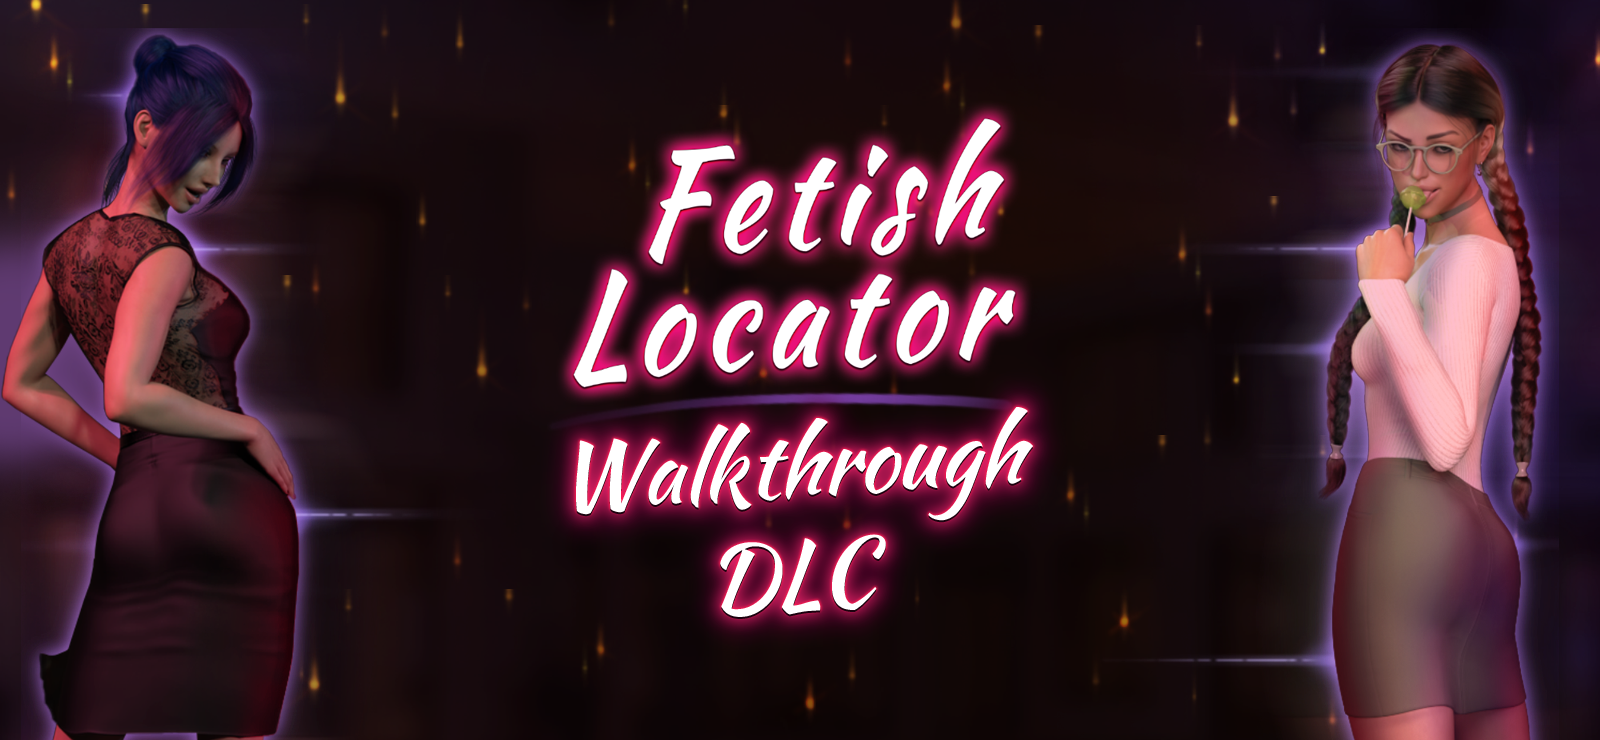 Fetish Locator Week One - Walkthrough DLC